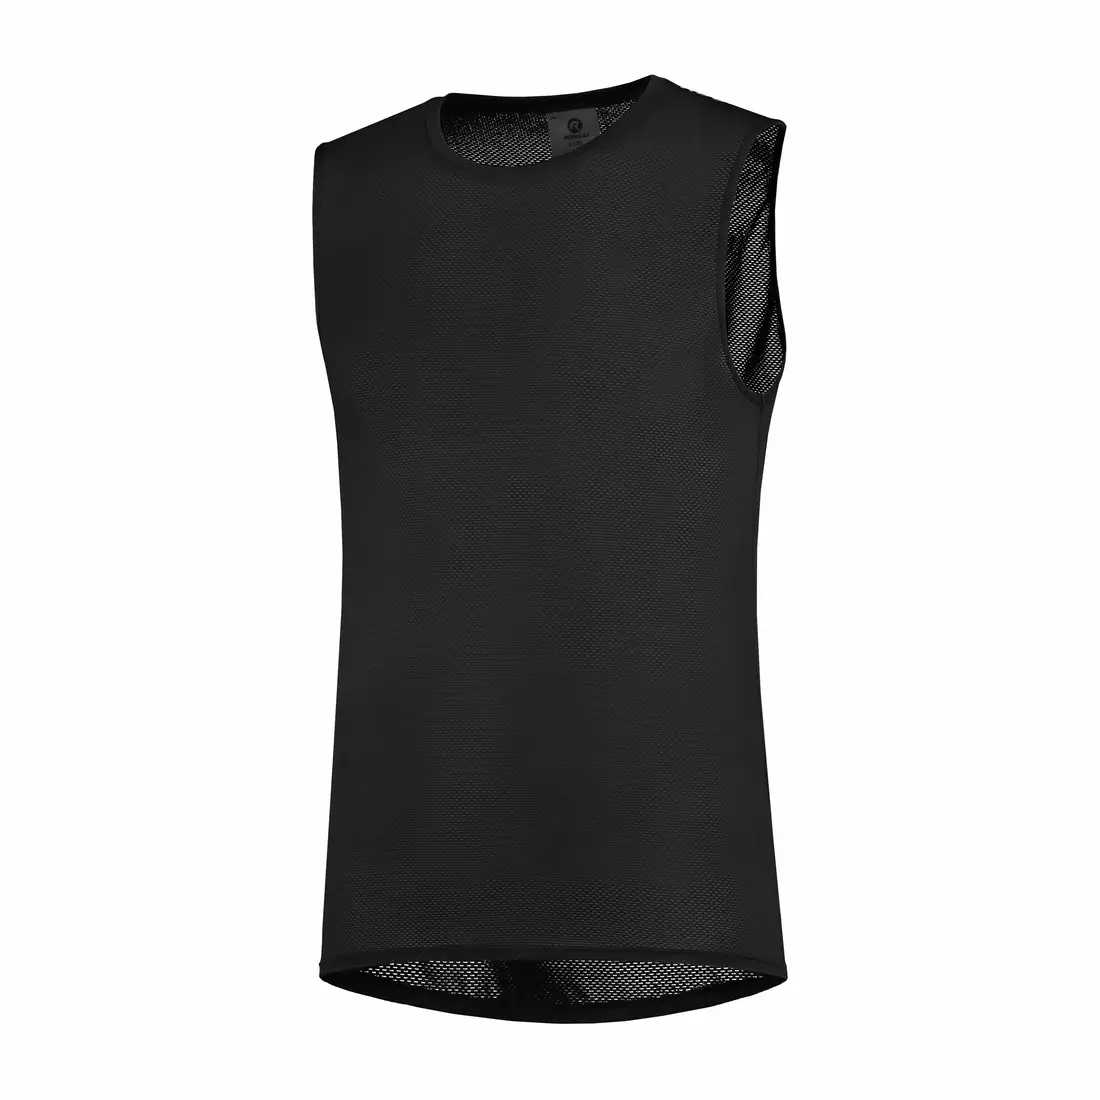 ROGELLI KITE 070.017 Men's mesh functional undershirt sleeveless Black